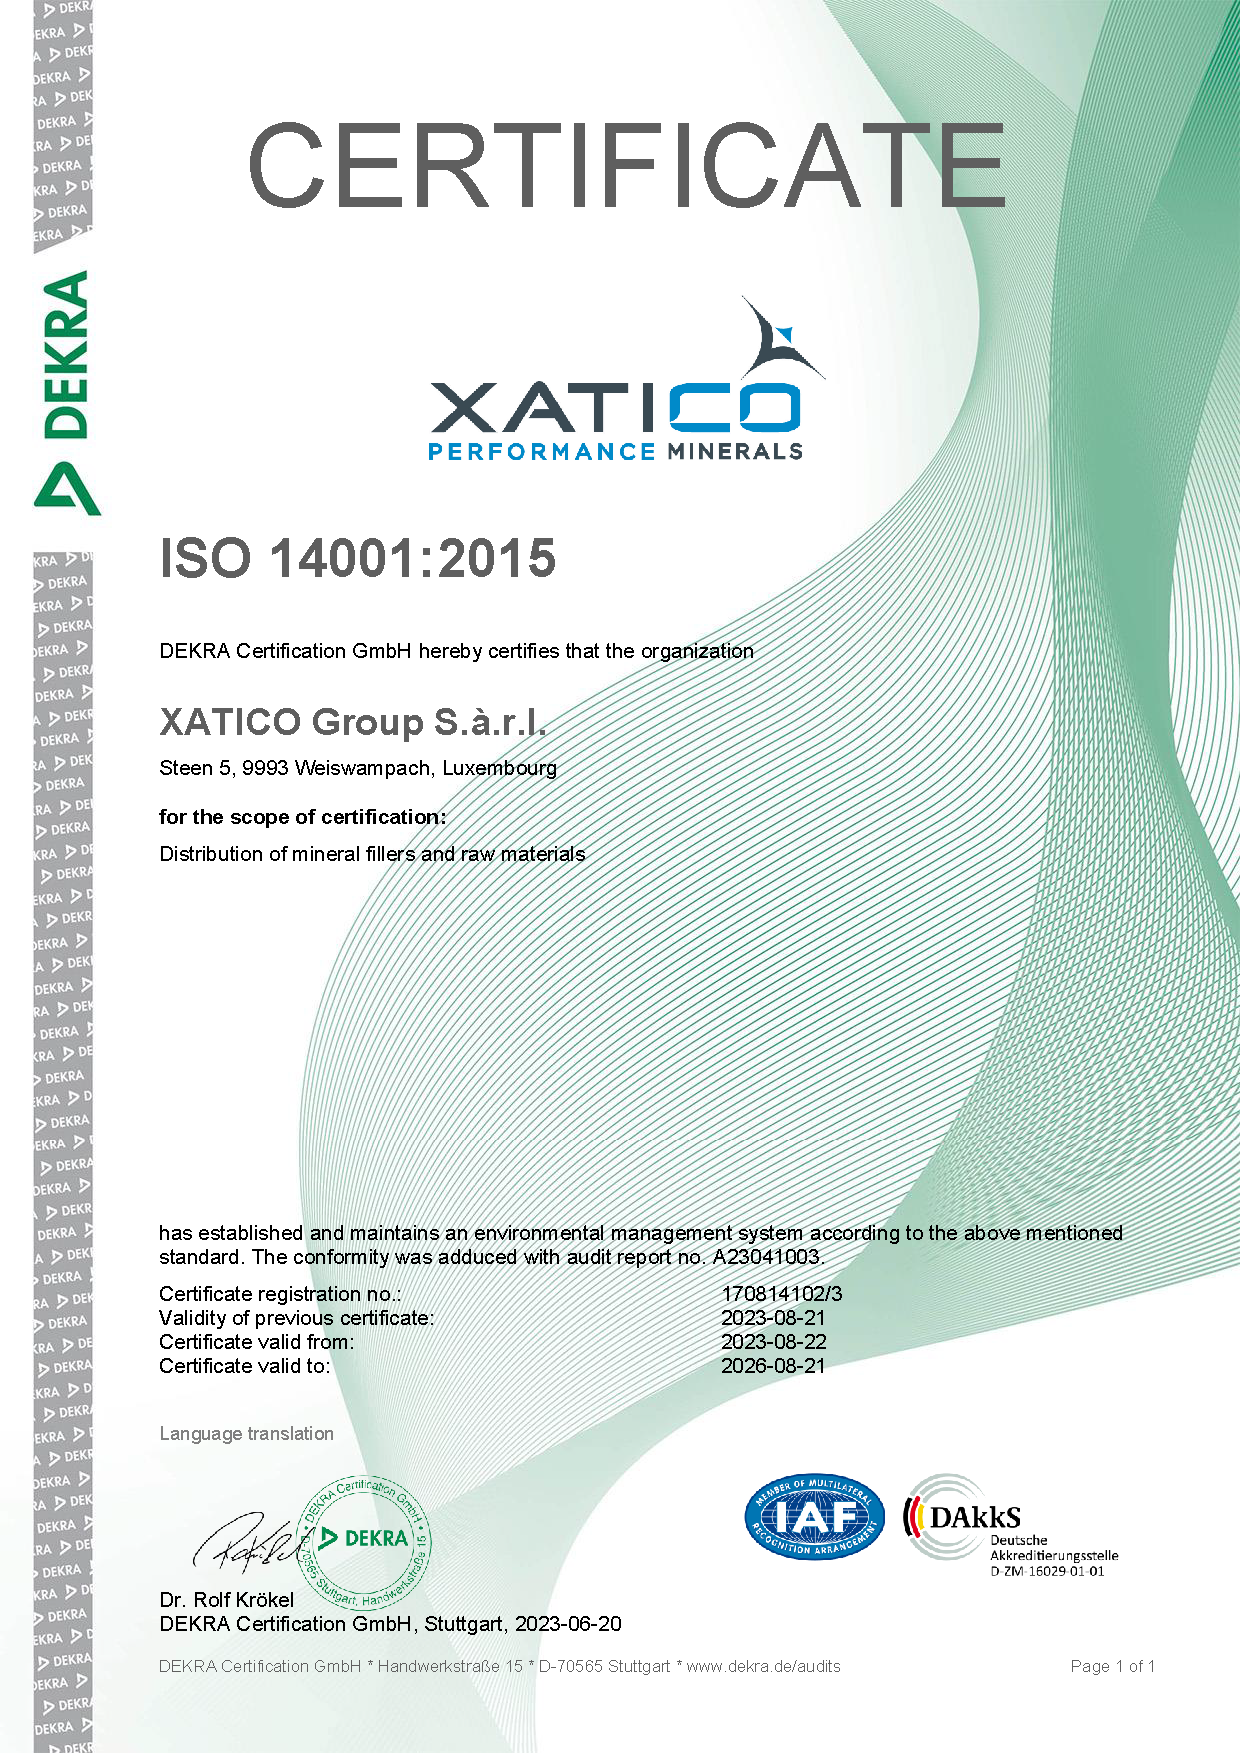 Xatico's environmental policy